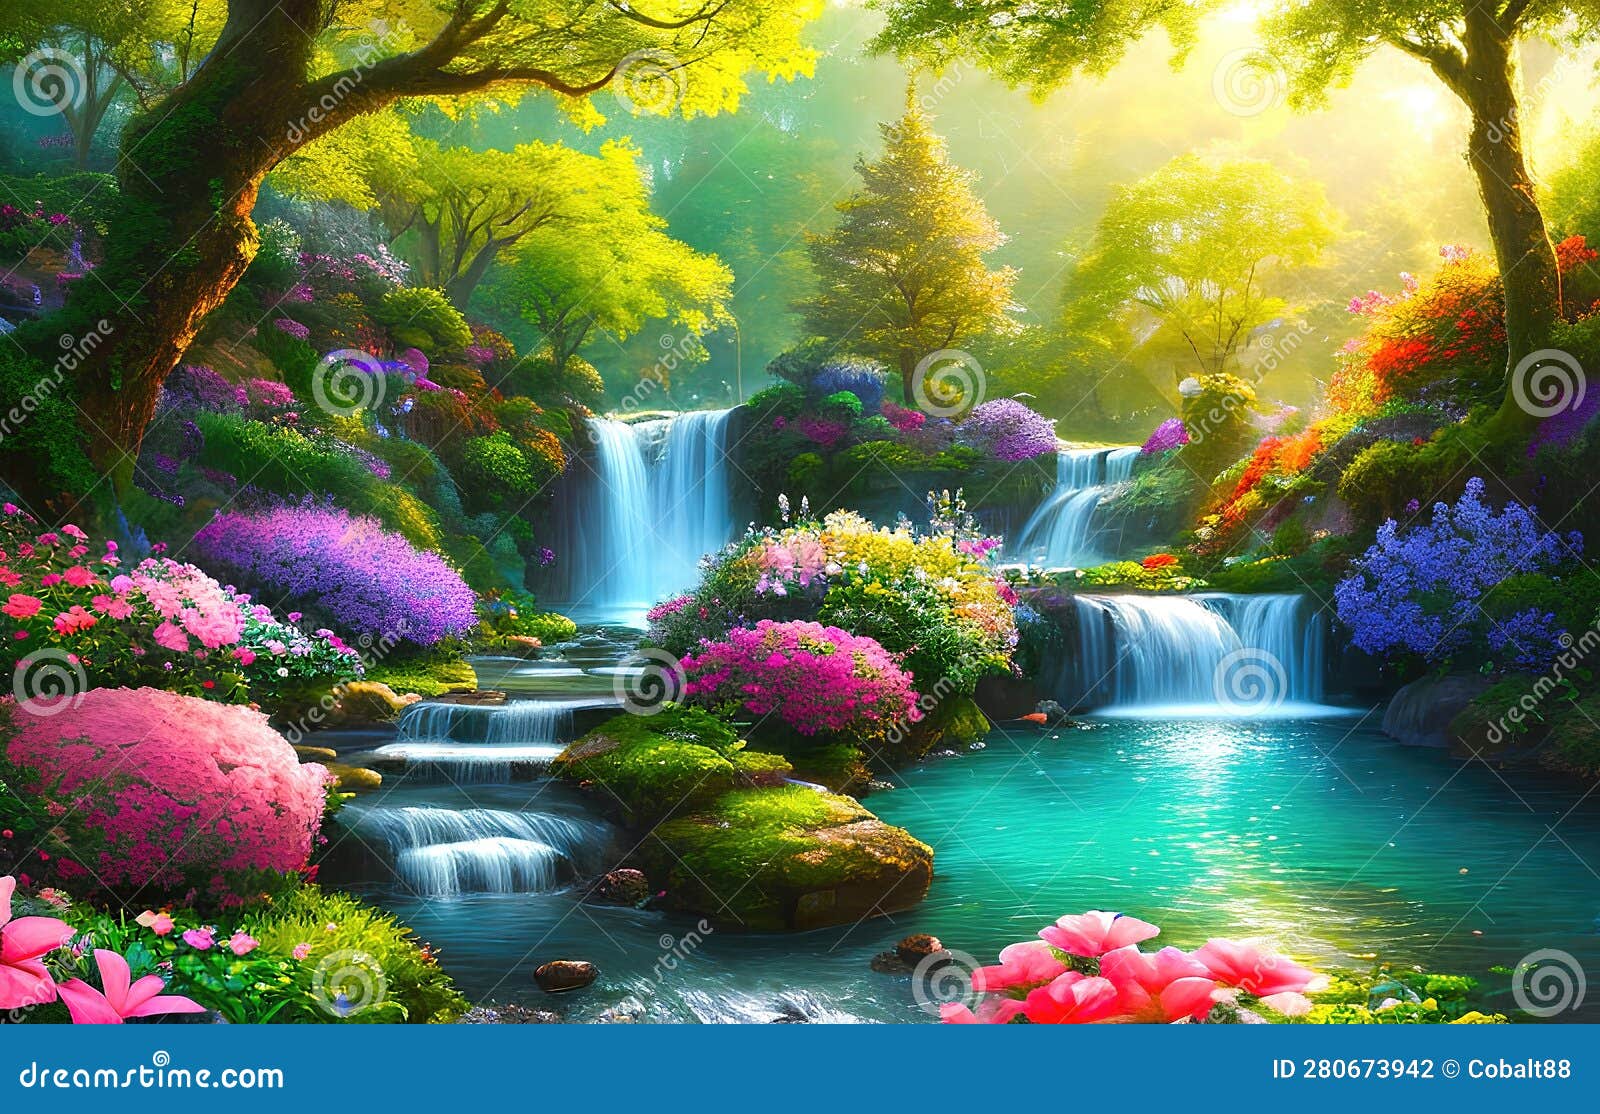 waterfall #nature #1080P #wallpaper #hdwallpaper #desktop | Waterfall, Waterfall  wallpaper, Nature